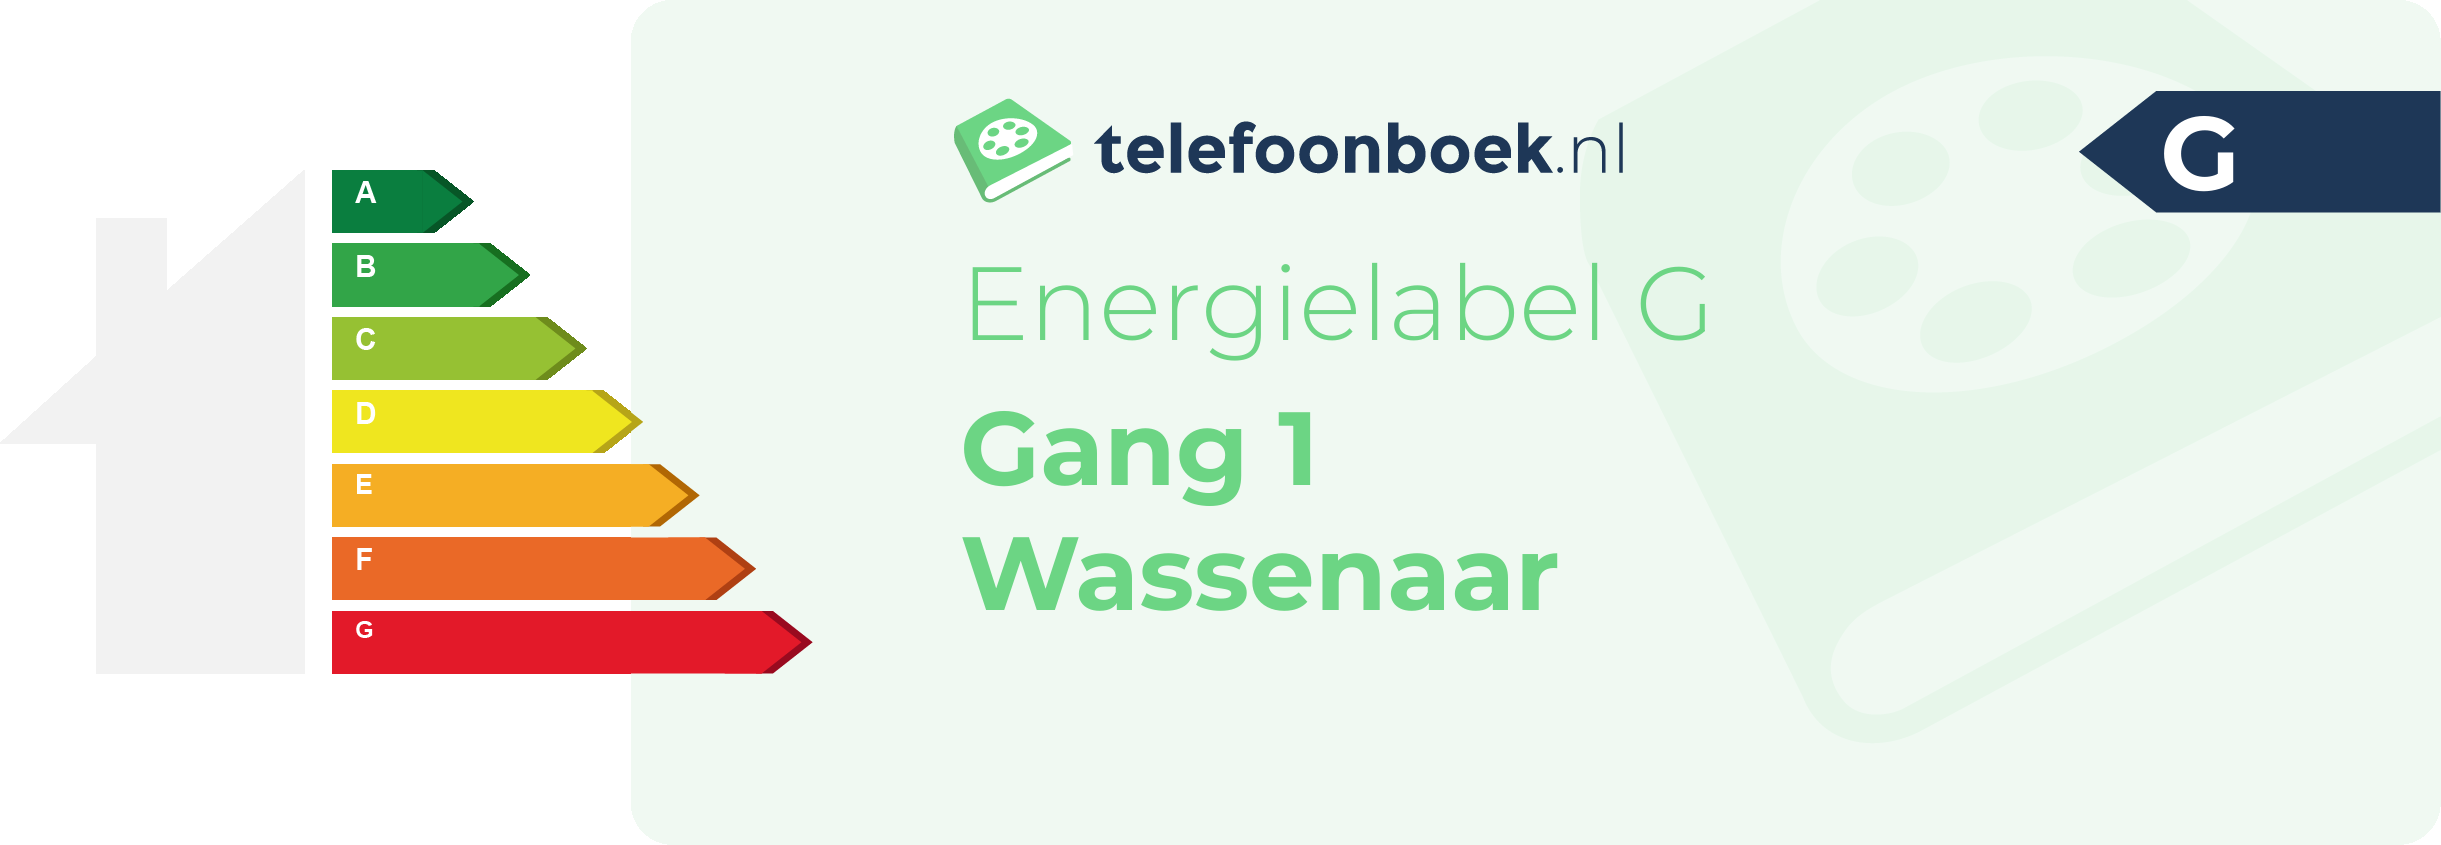 Energielabel Gang 1 Wassenaar